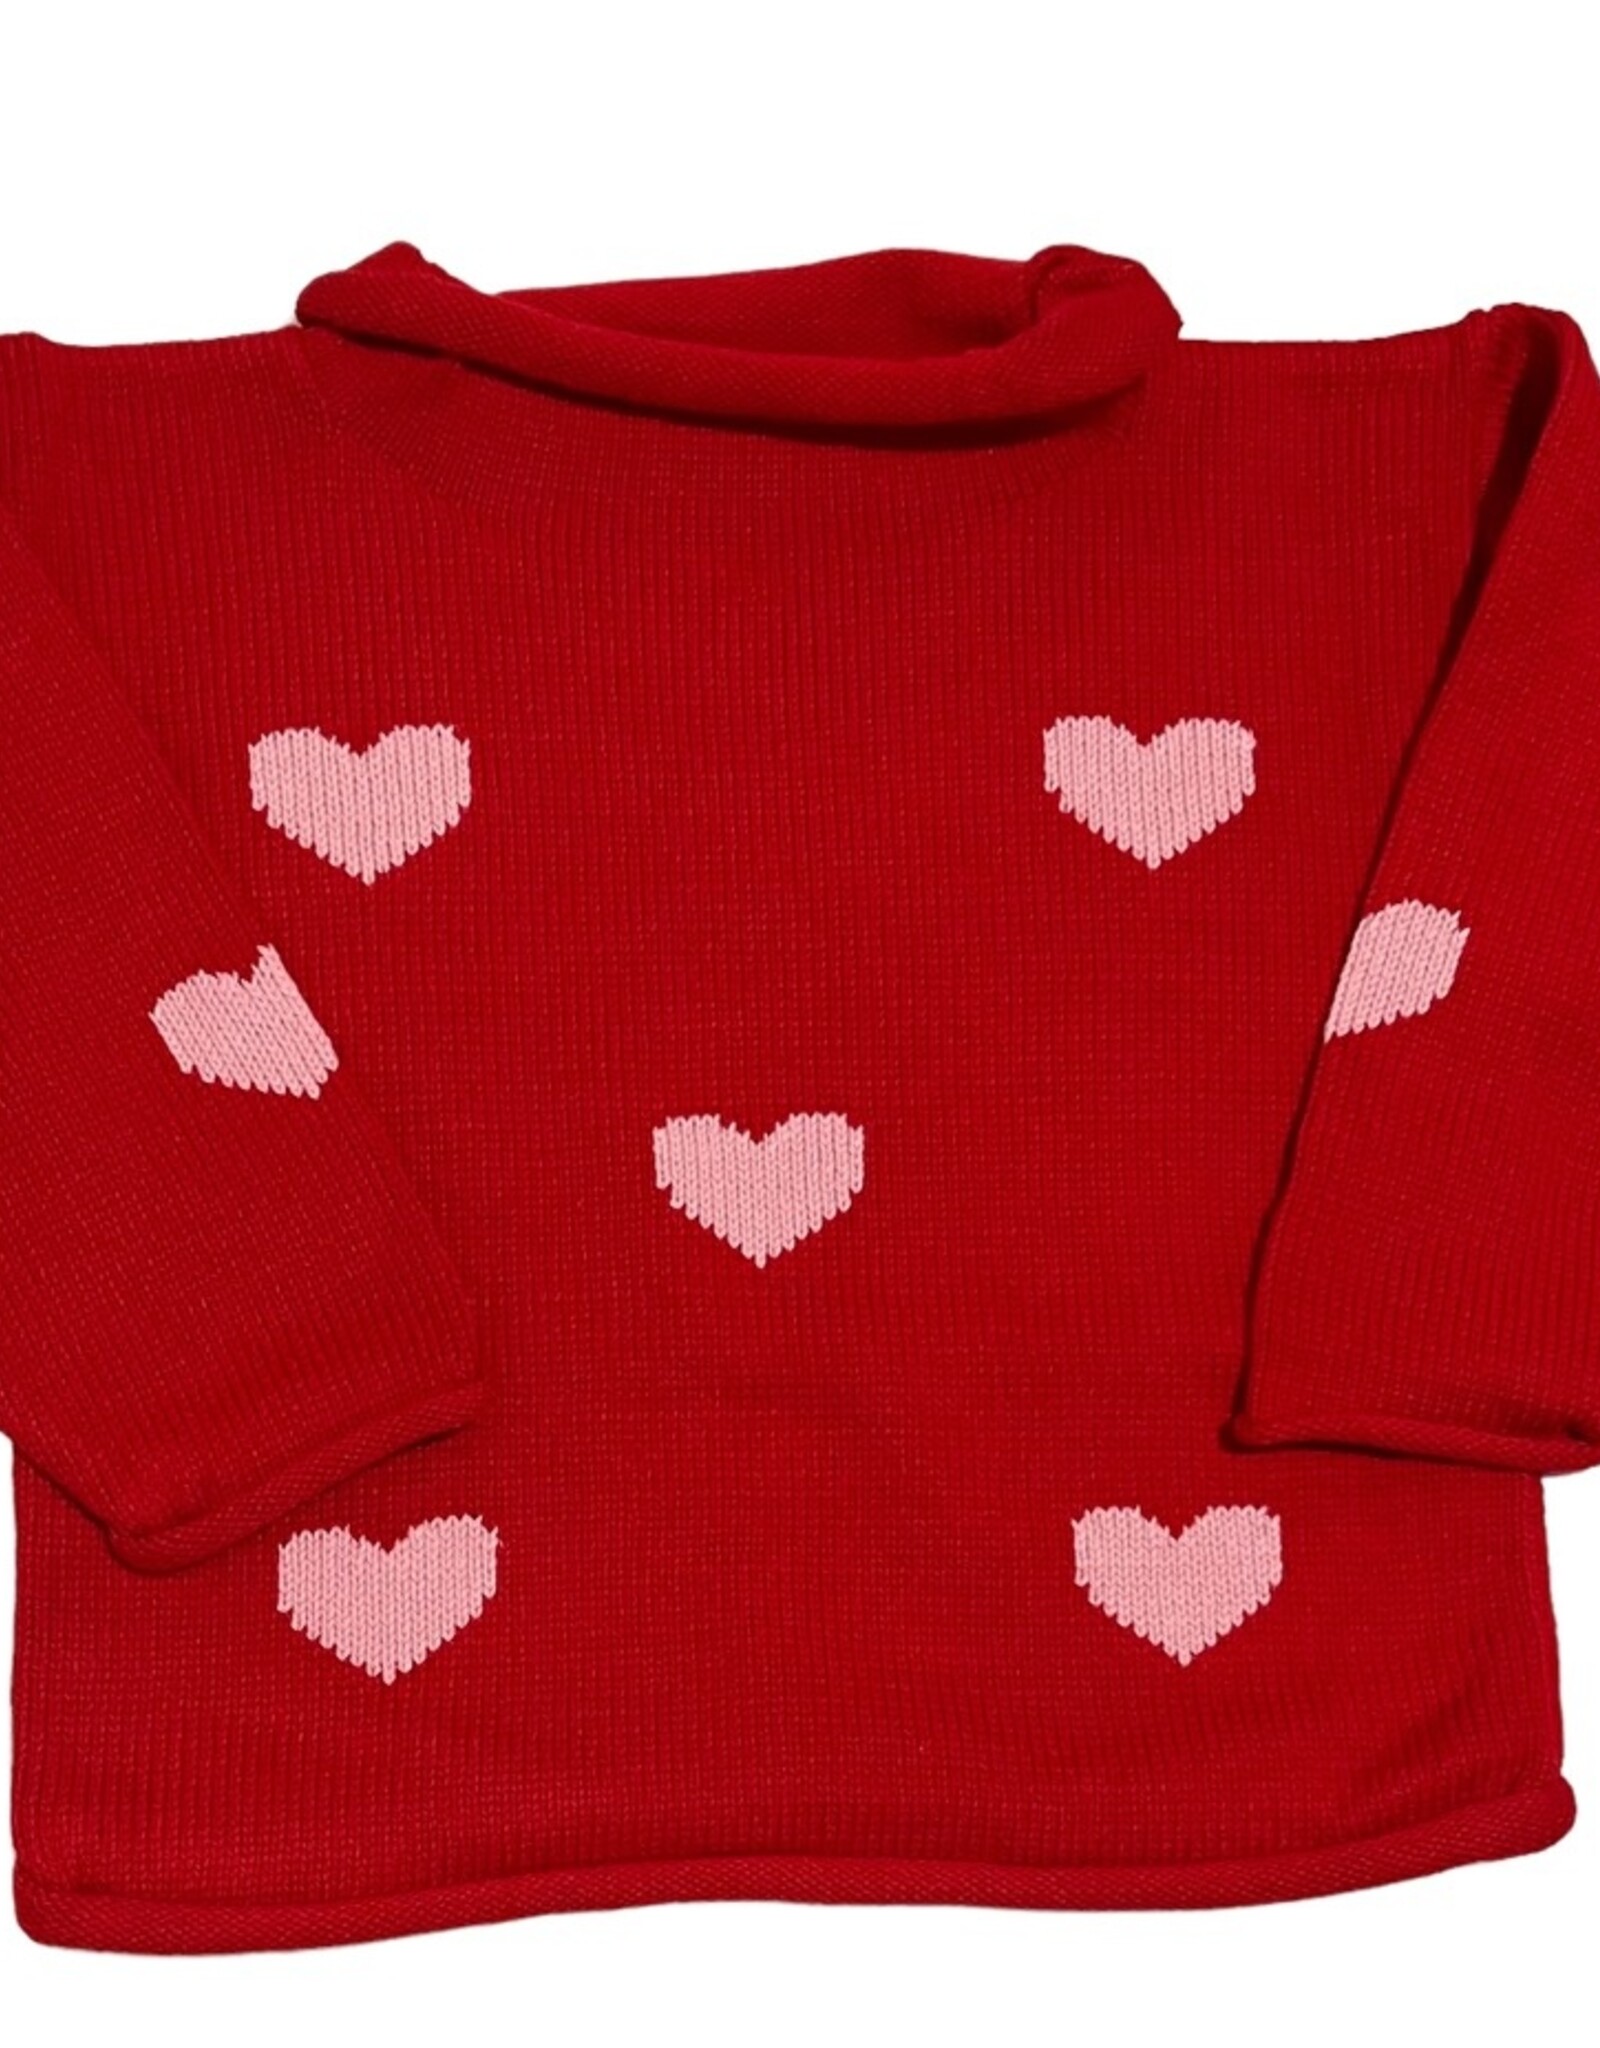 Luigi Kids Rollneck Sweater Hearts All-Over